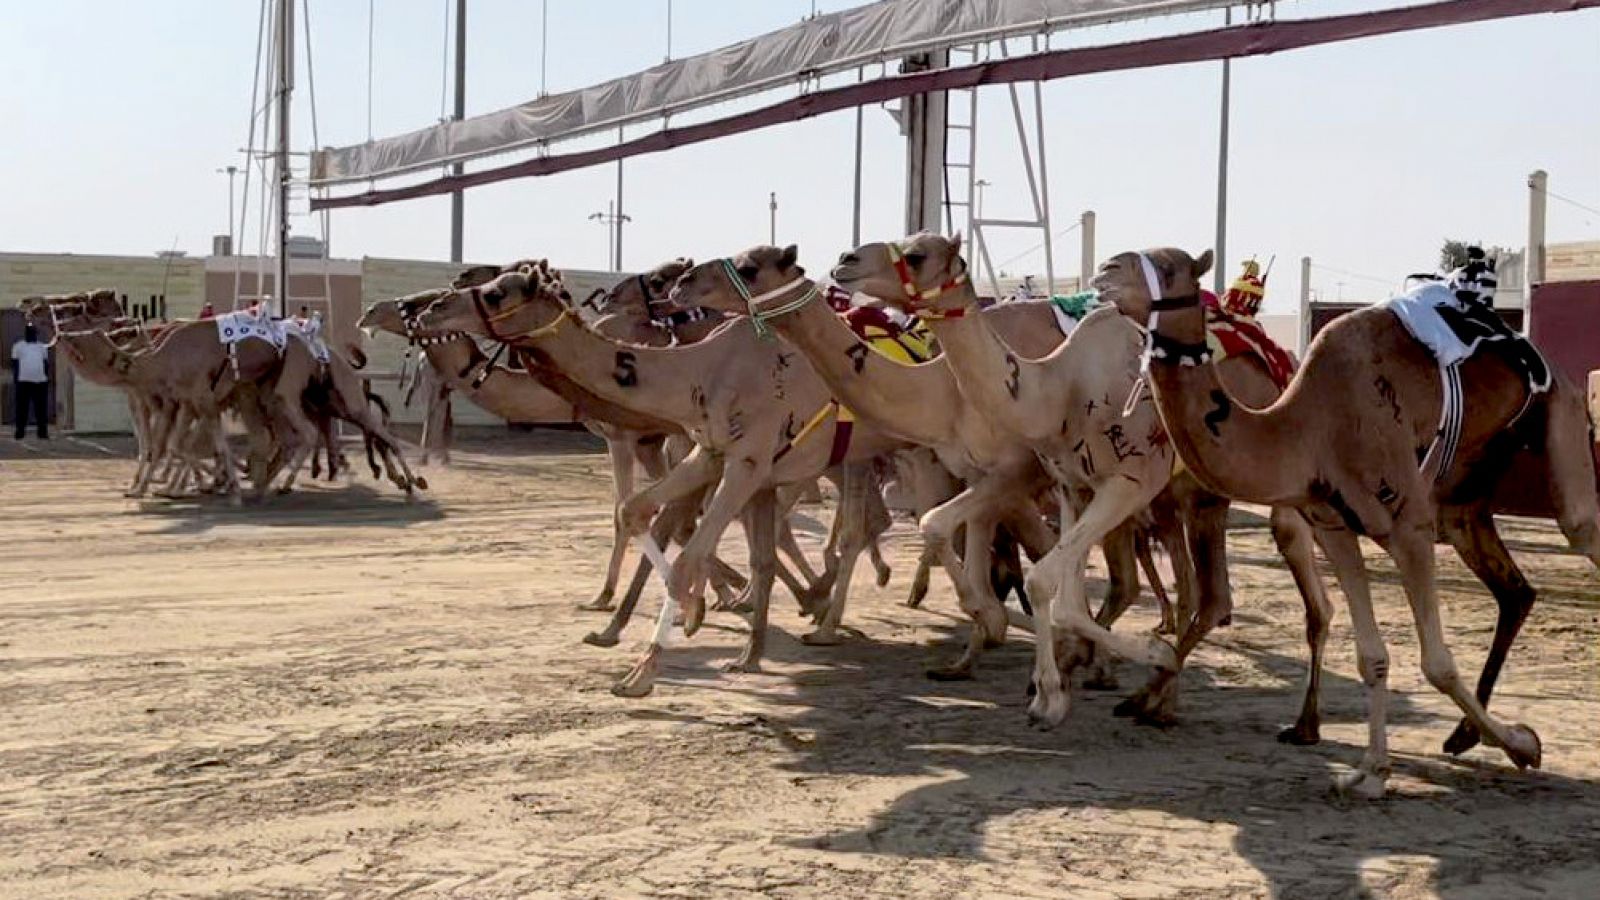 Qatar 2022 | Carreras de camellos, la gran pasión catarí